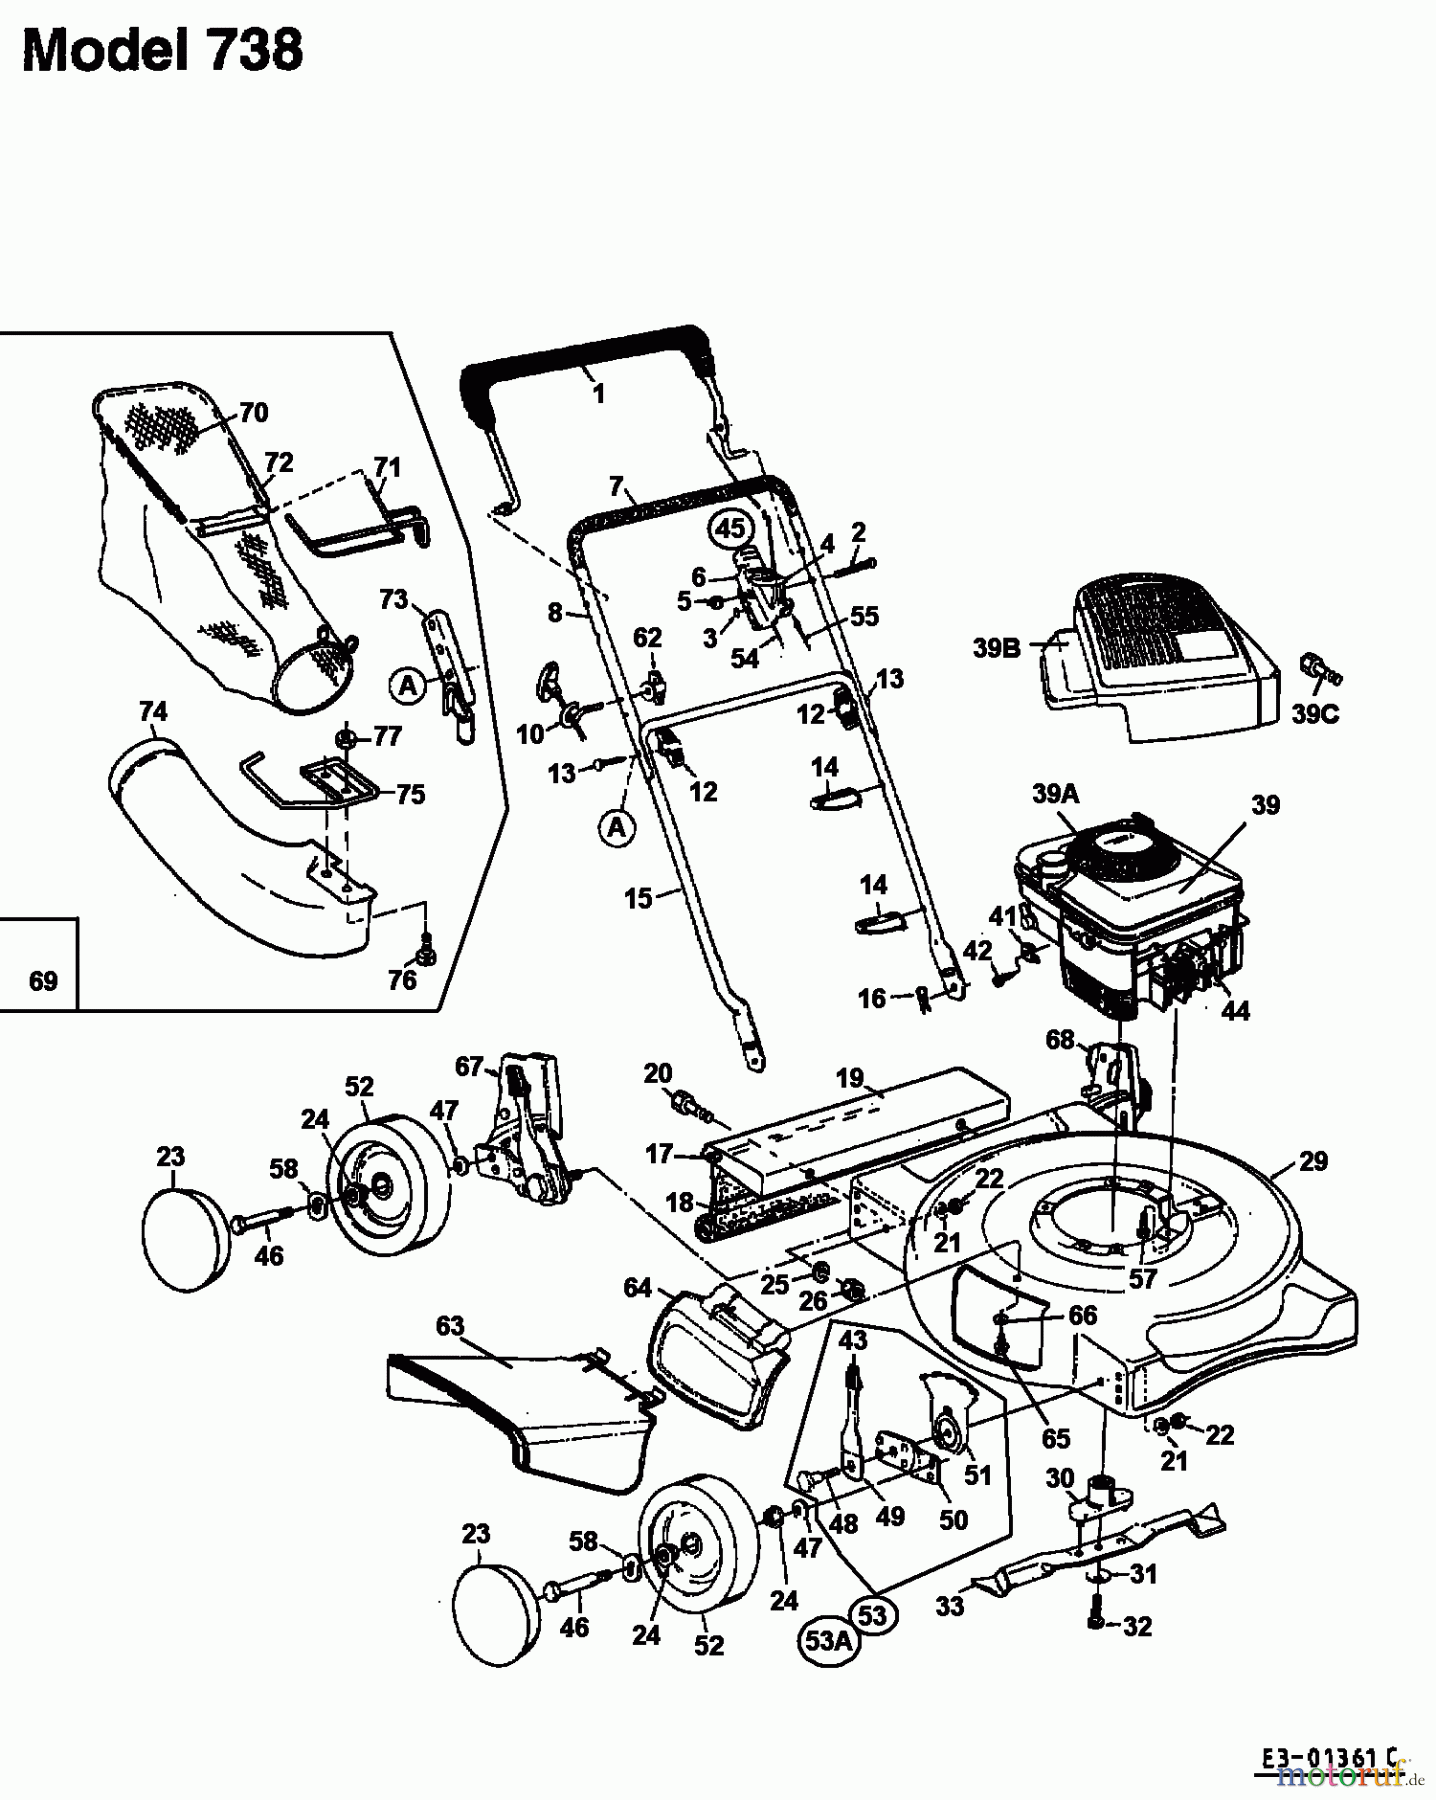  Gutbrod Petrol mower MB 52 11A-738C690  (2001) Basic machine